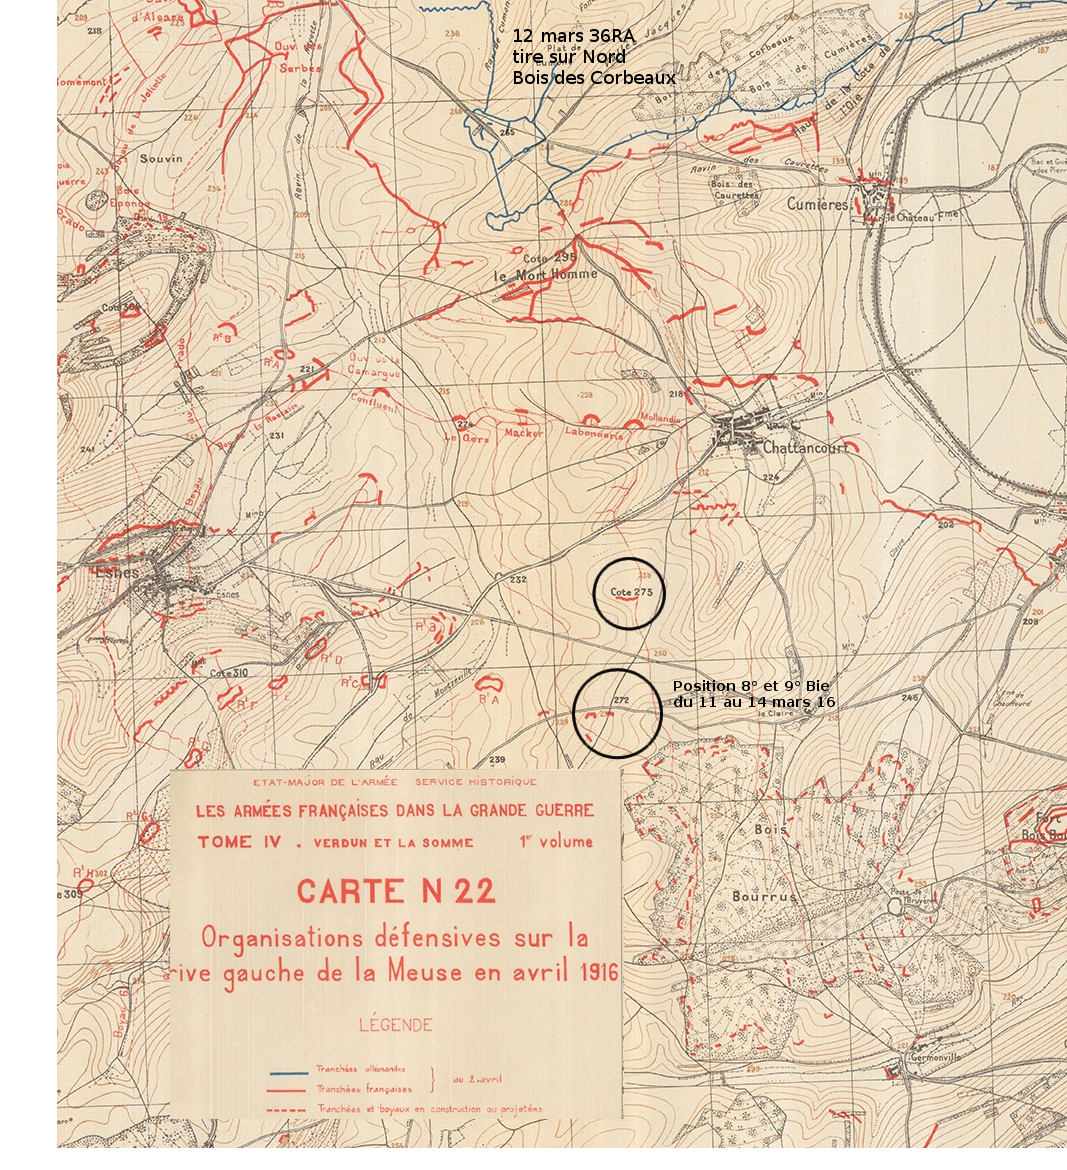 Verdun position 36RA 11-14 mars 16